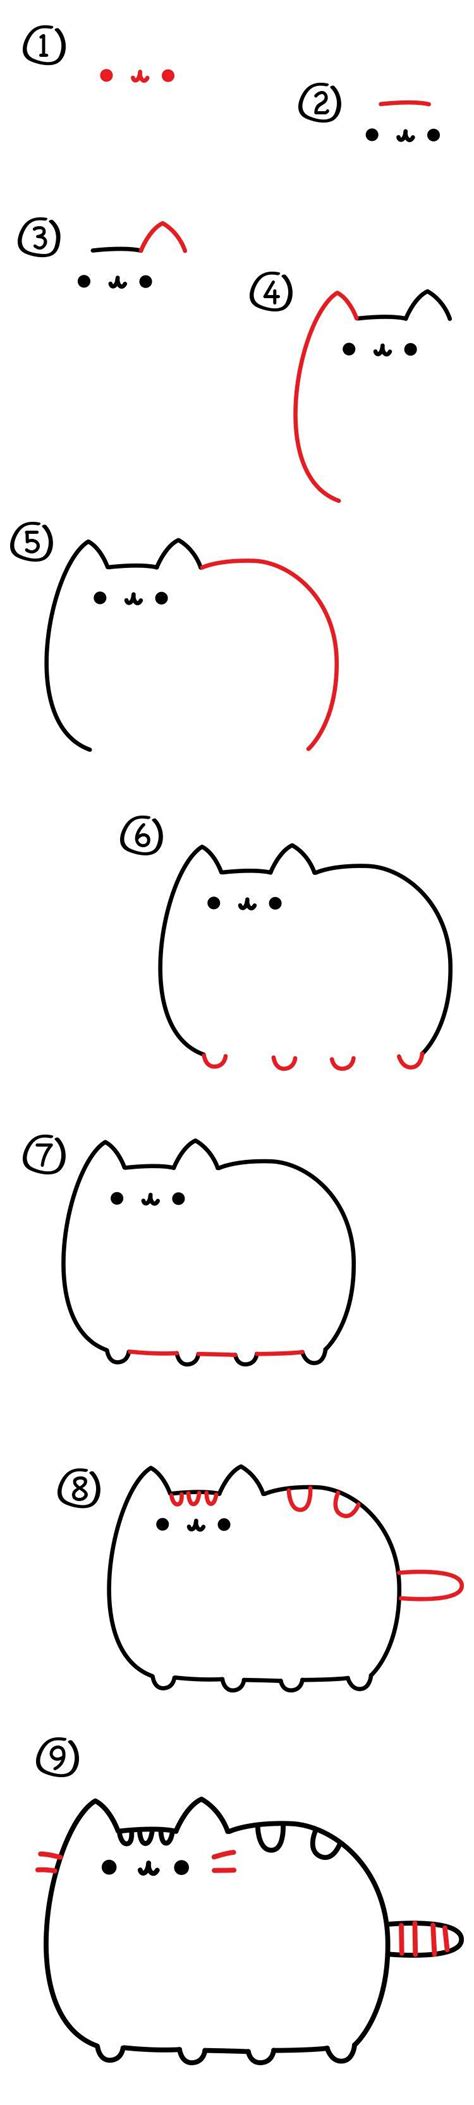 How To Draw The Pusheen Cat Art For Kids Hub Art For Kids Hub